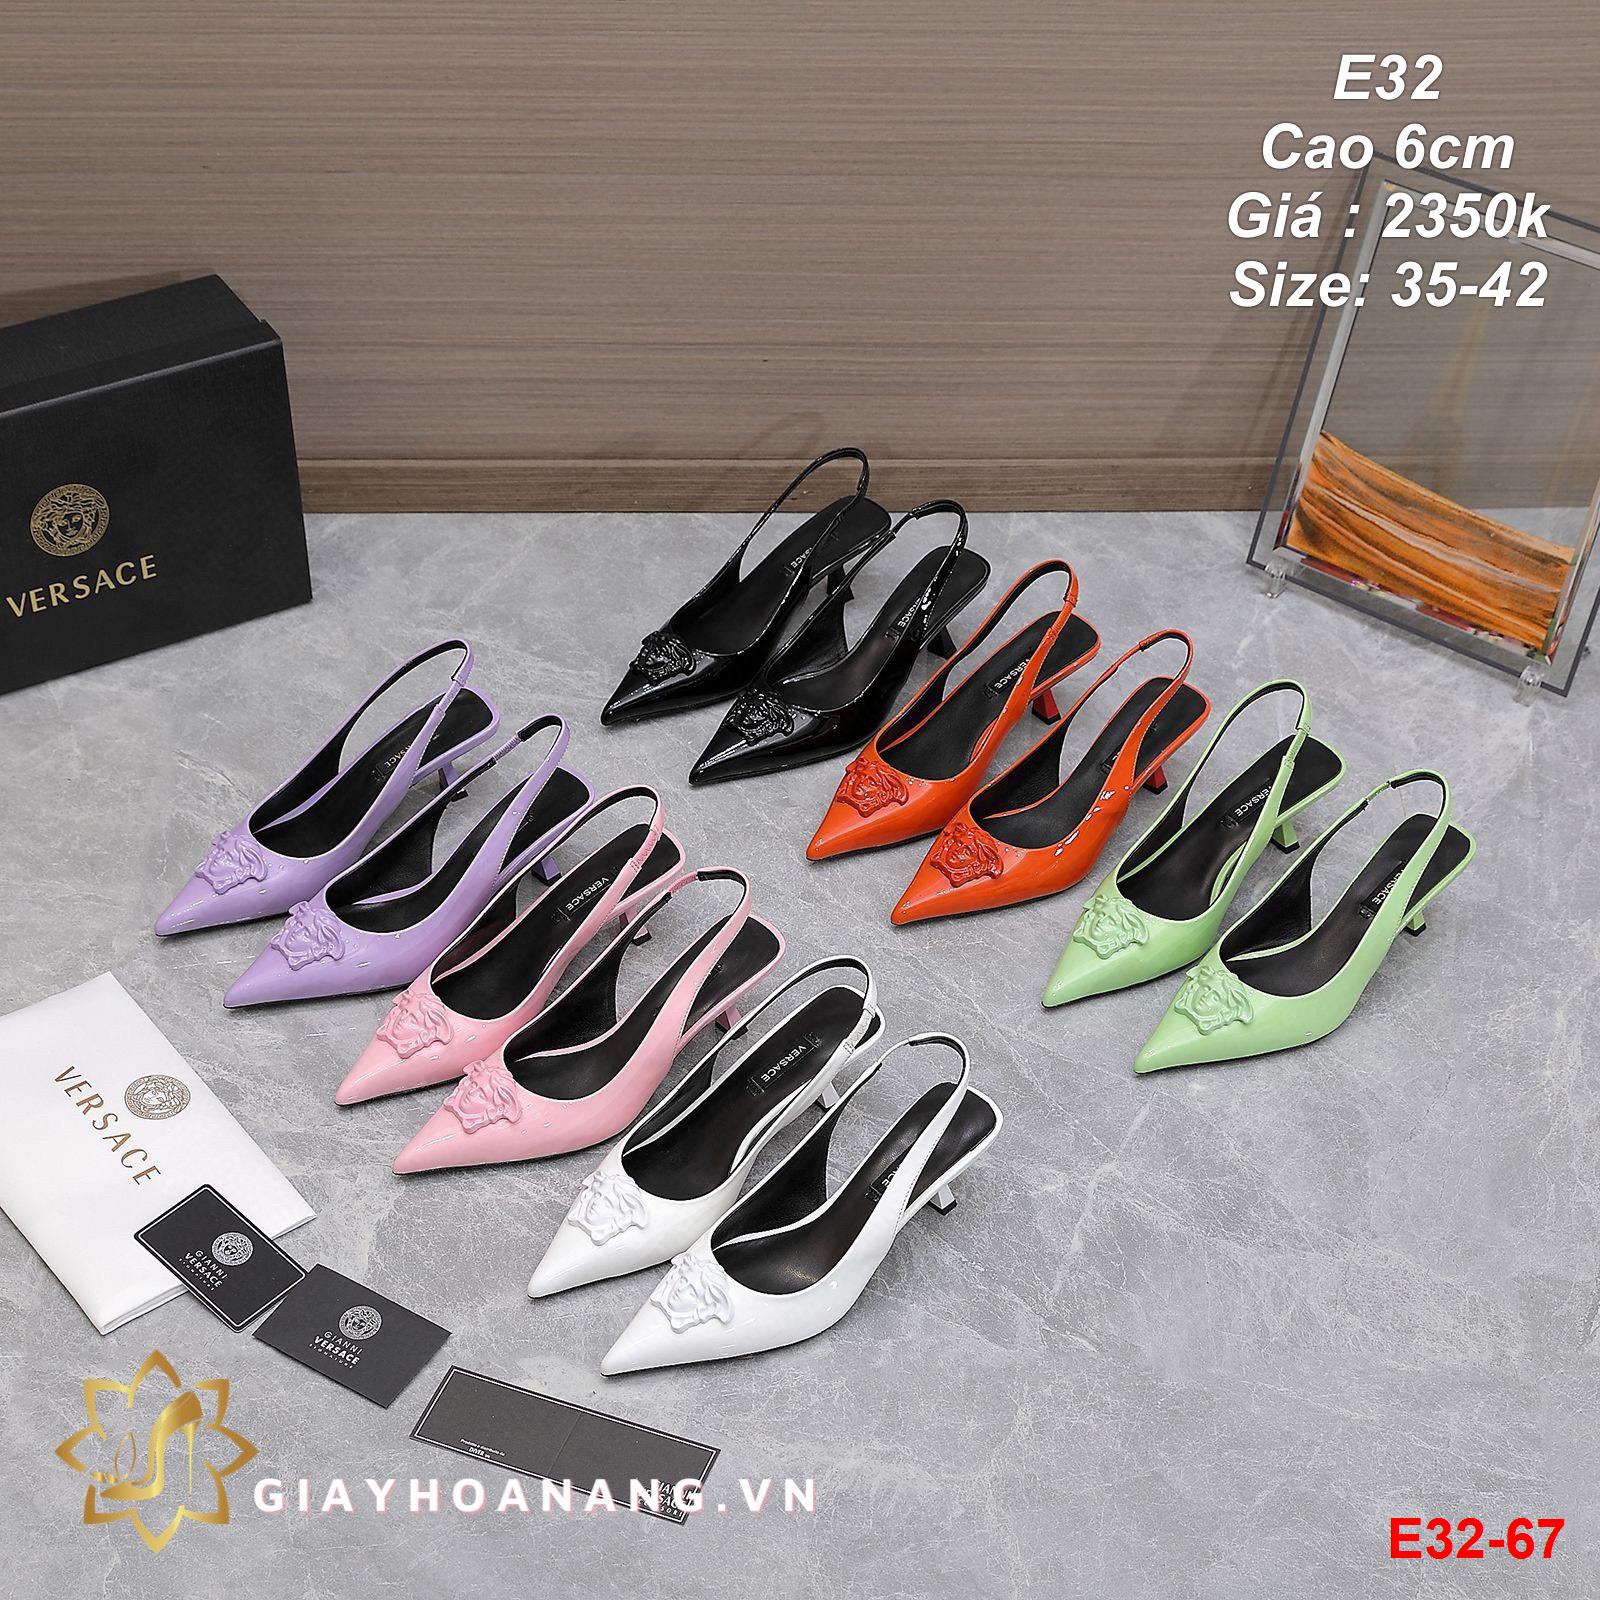 E32-67 Versace sandal cao 6cm siêu cấp